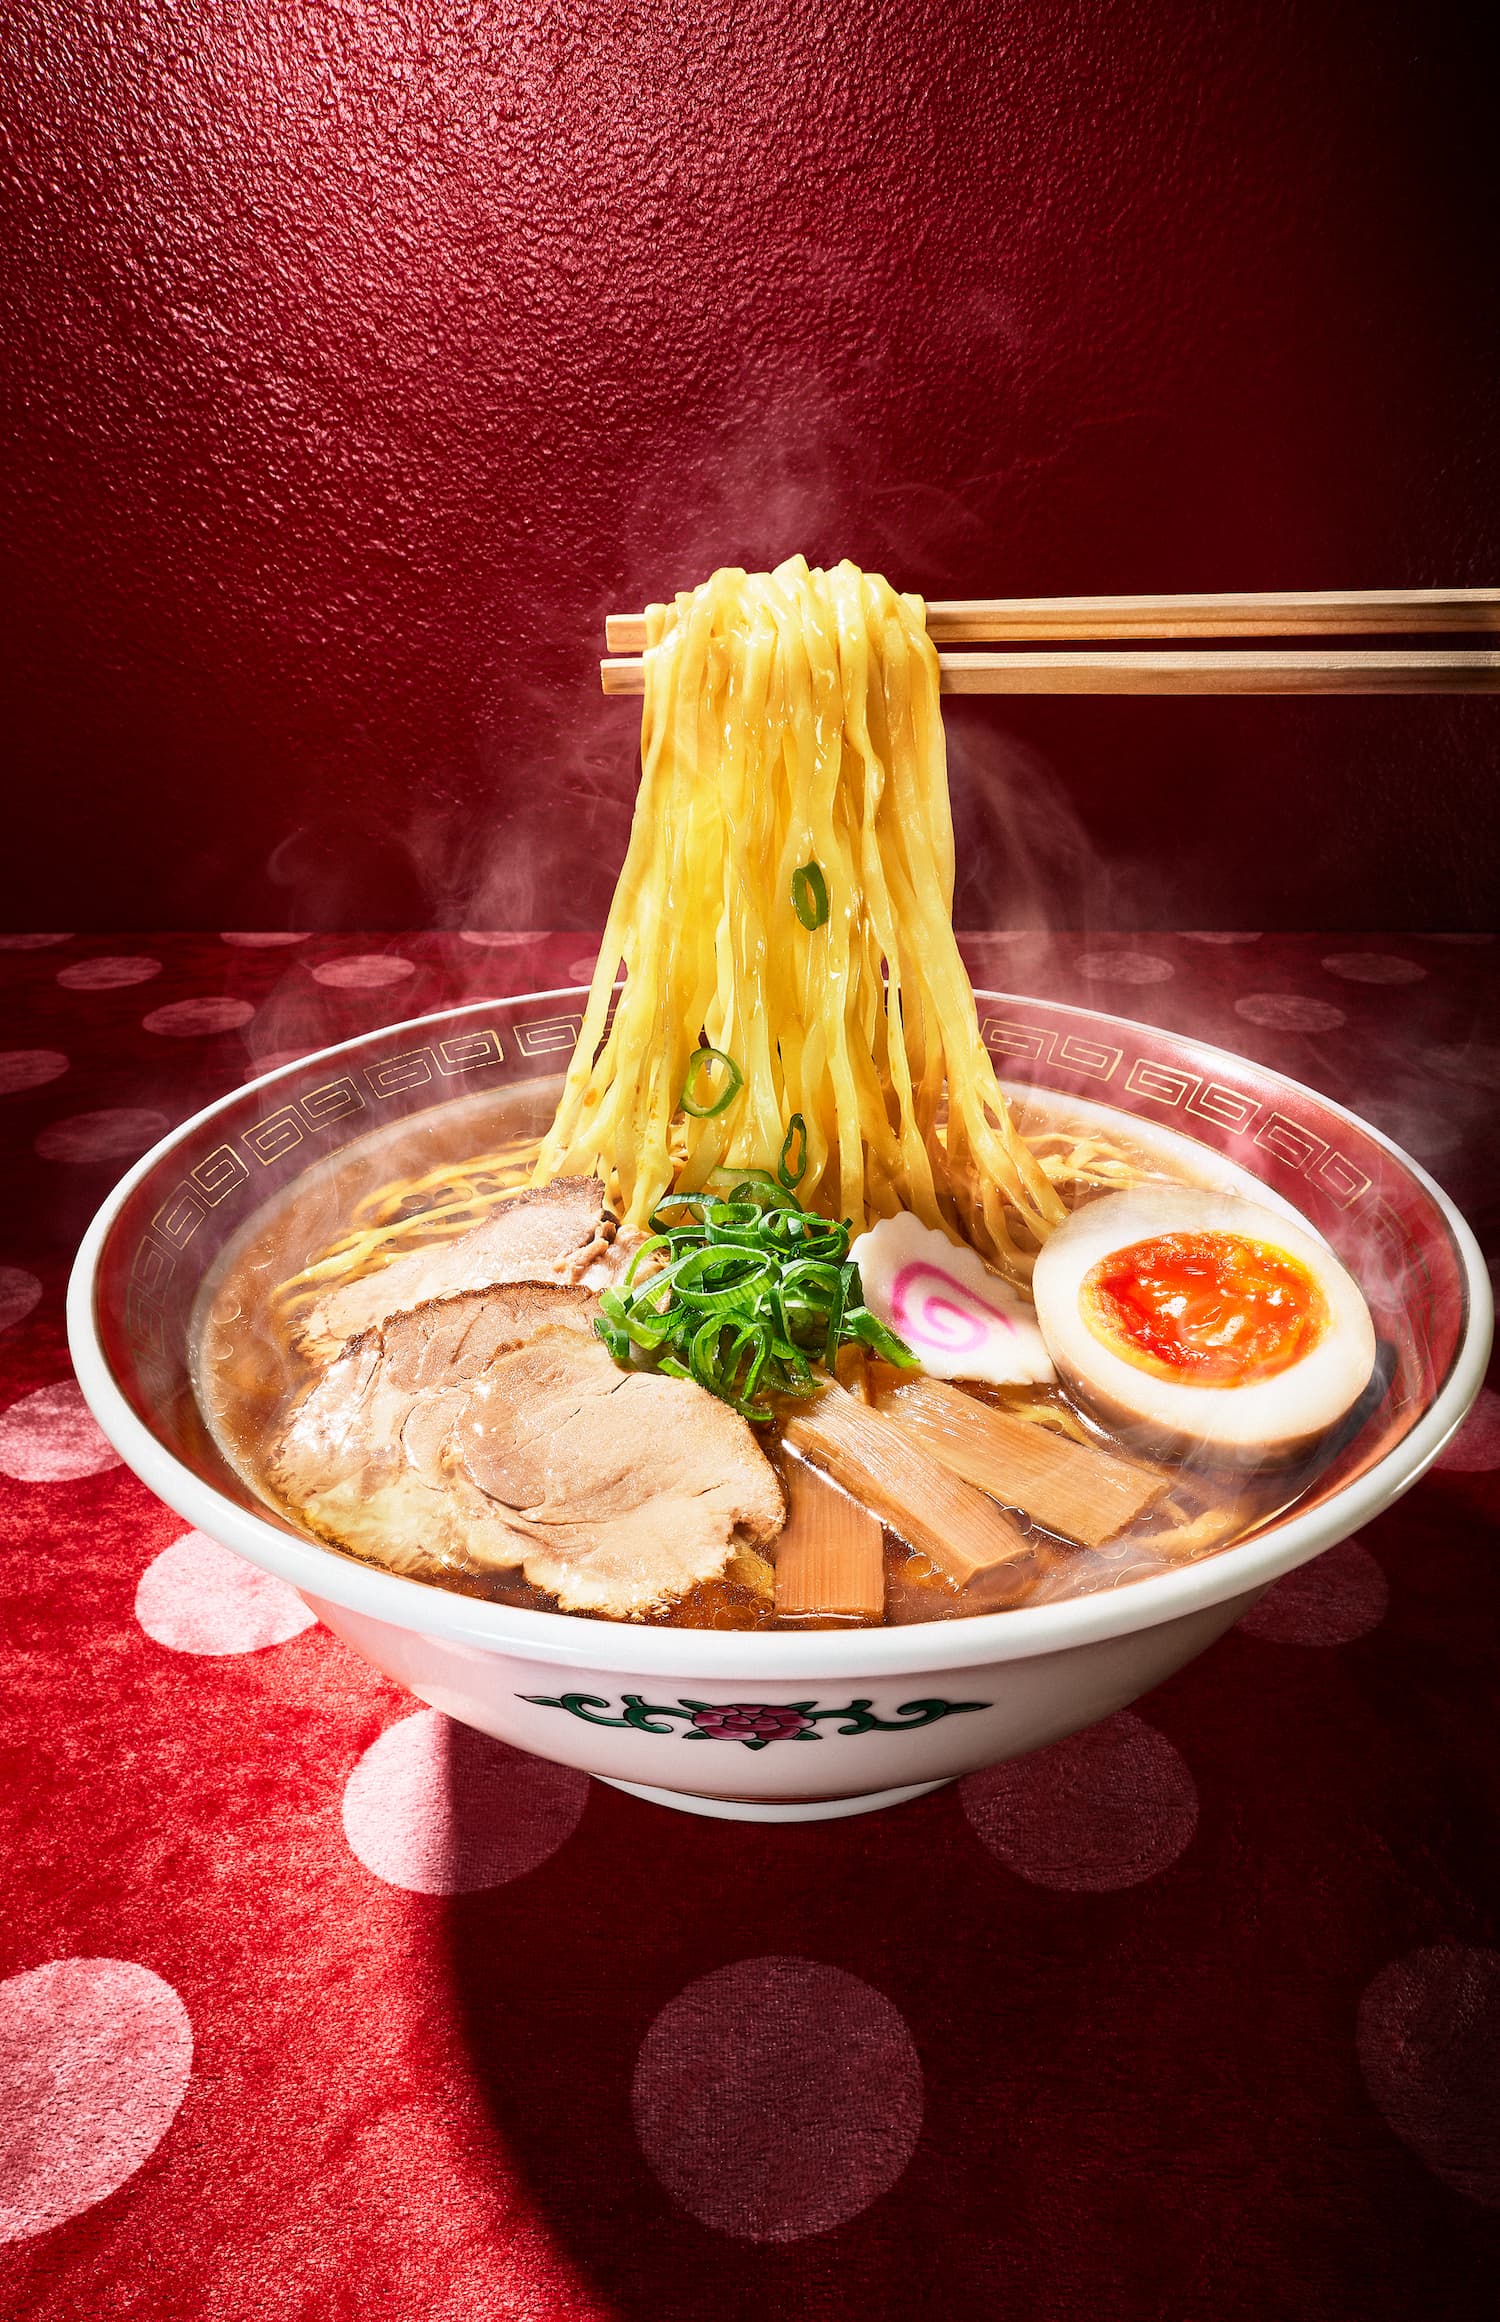 Ramen noodles photographed by Suzuki